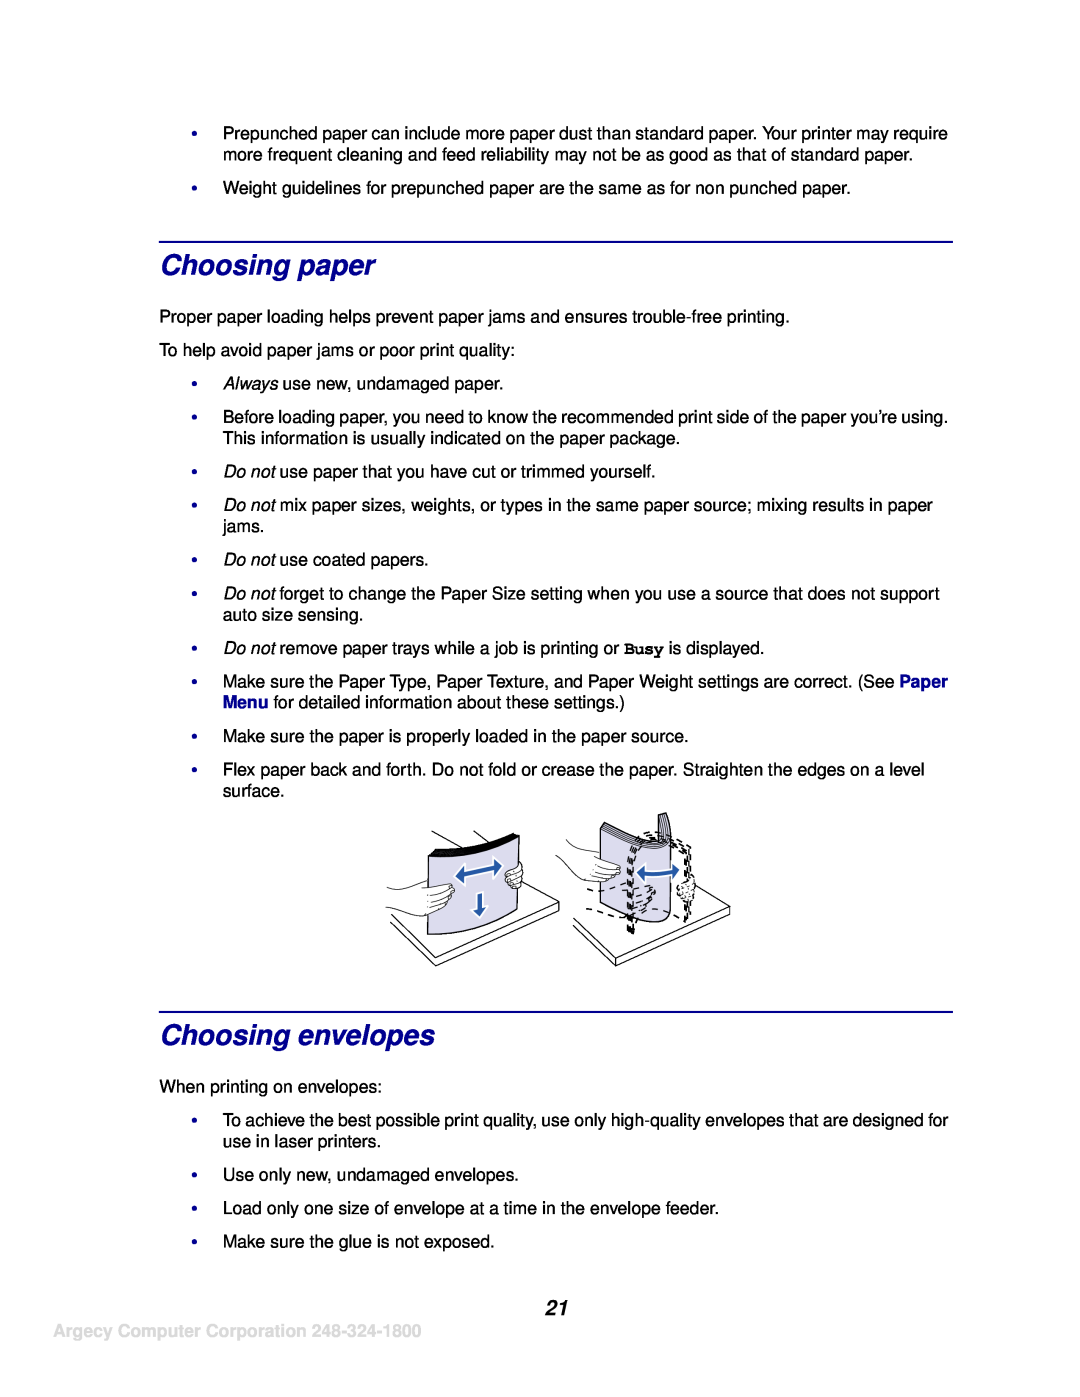 IBM 1120, 1125 manual Choosing paper, Choosing envelopes, Argecy Computer Corporation 